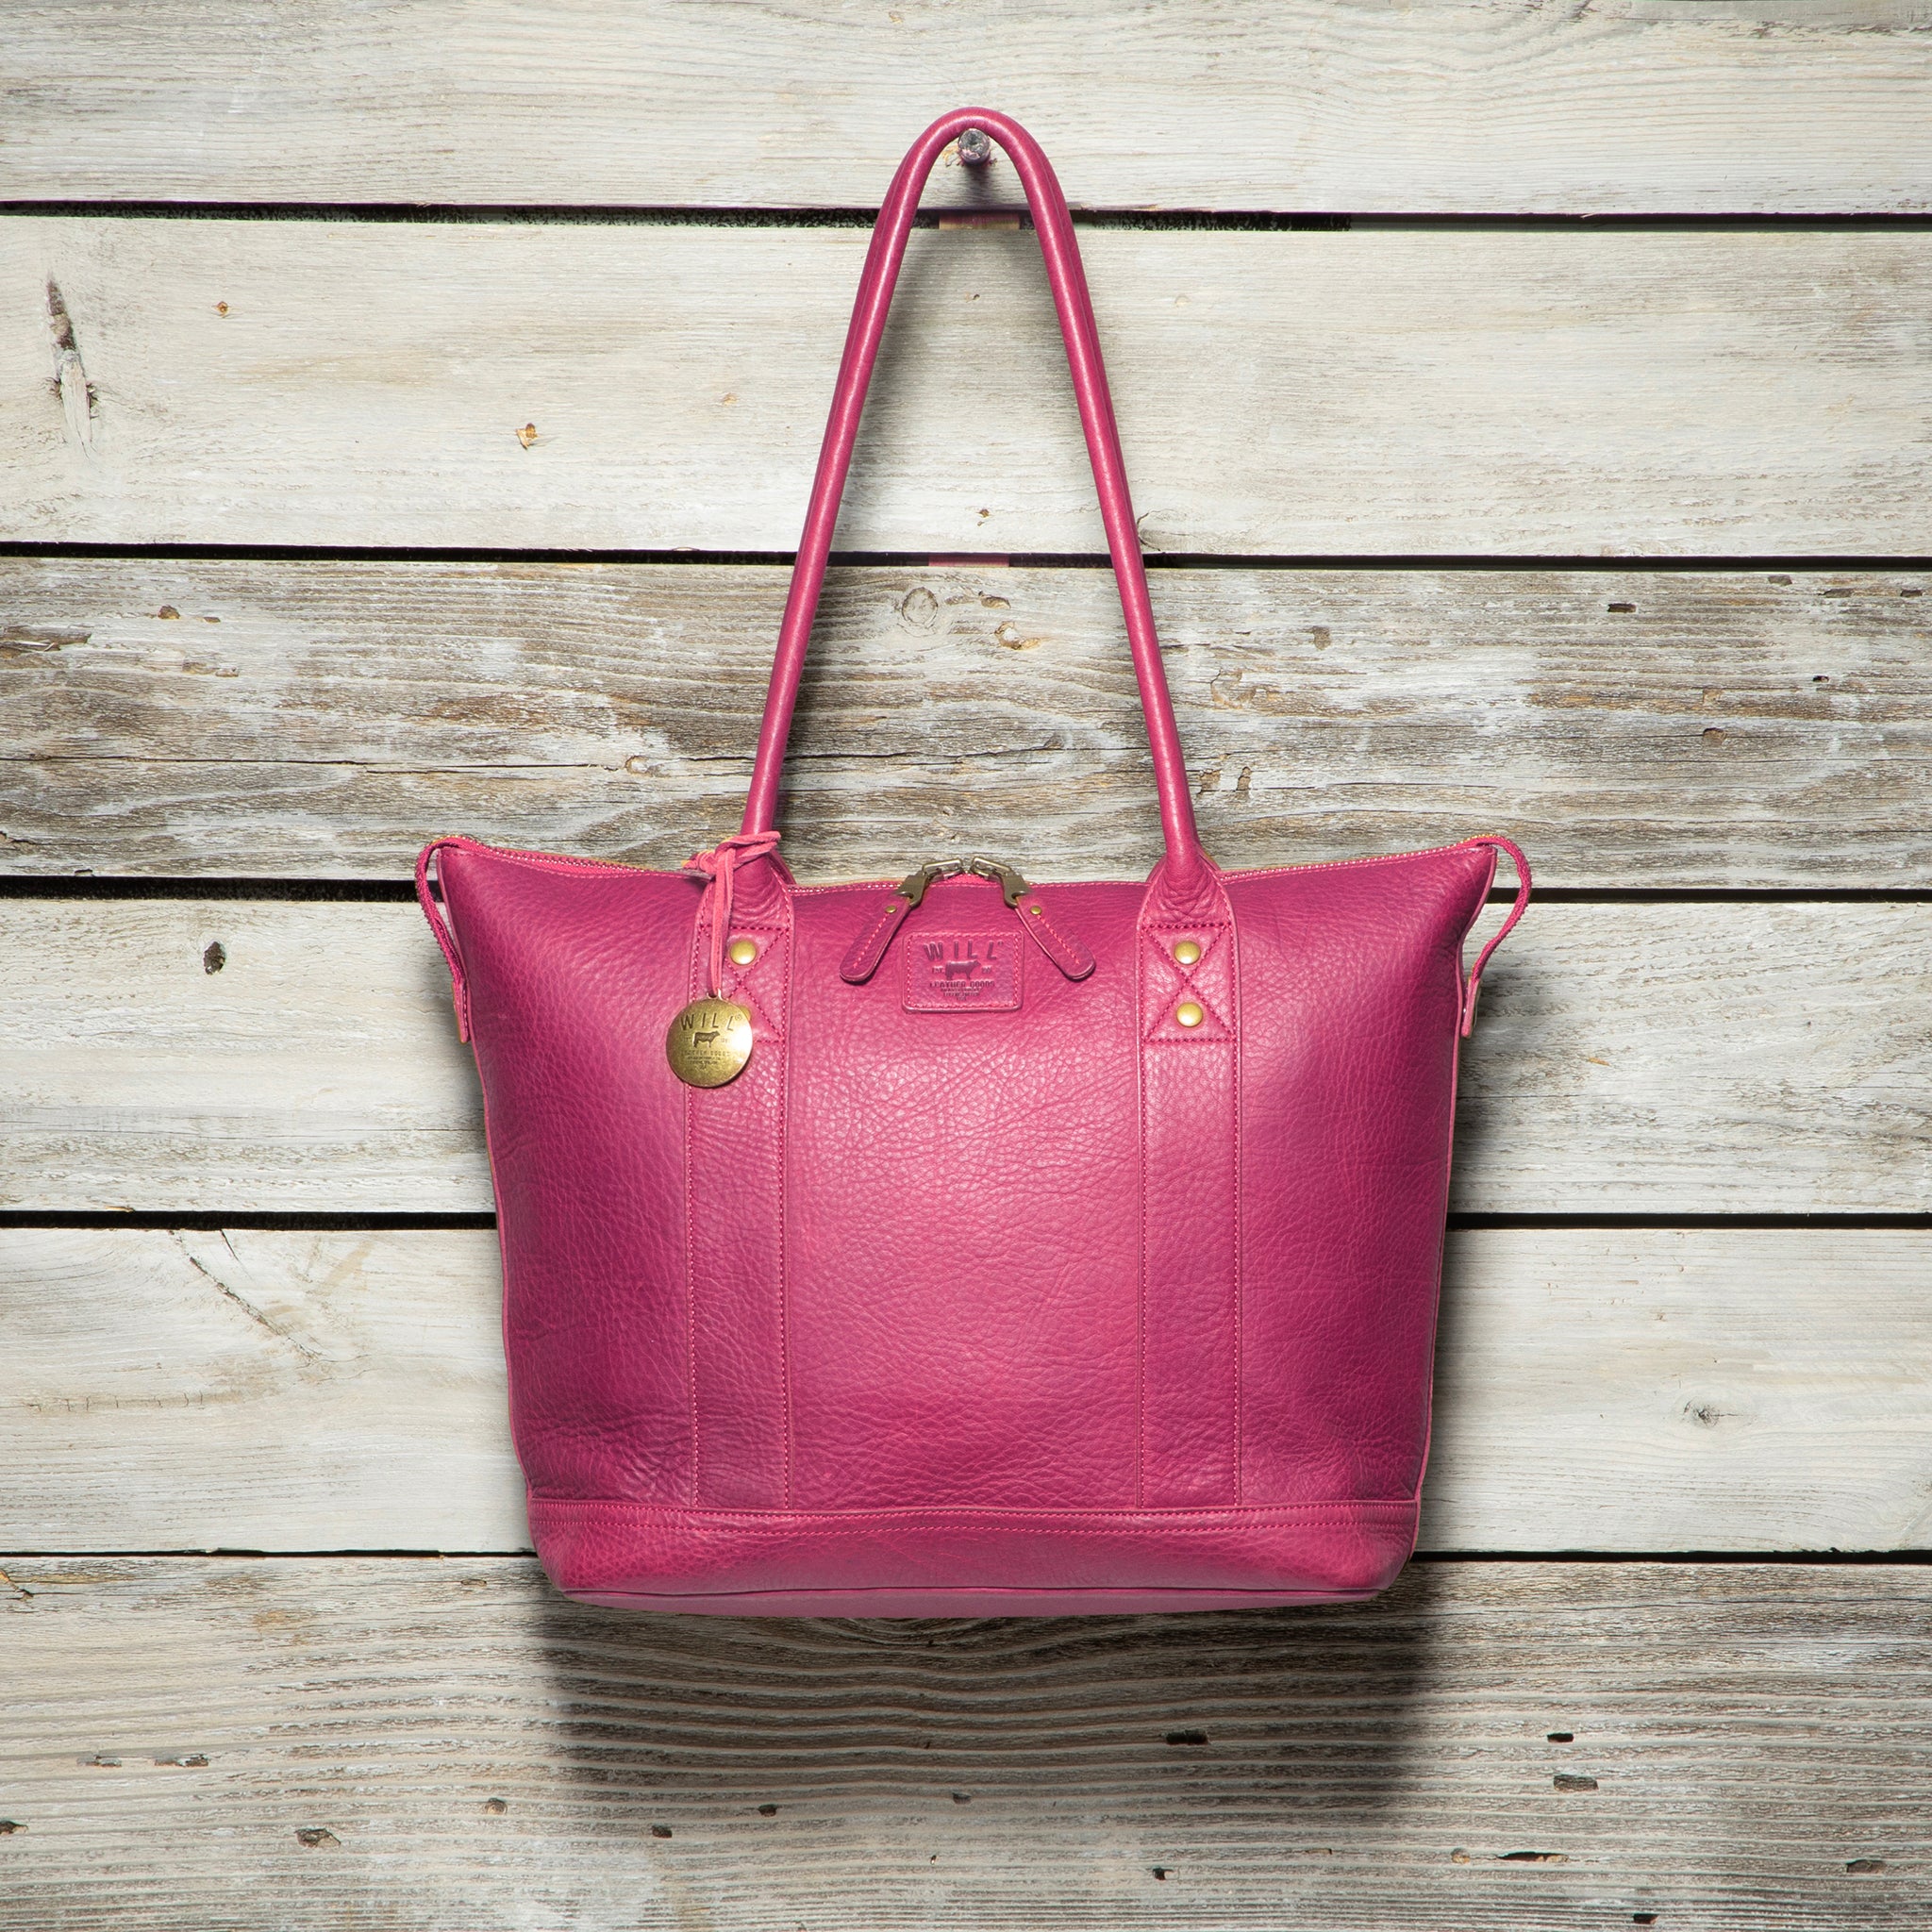 Furla fuchsia bag | Leather bowling bag, Bags, Kate spade top handle bag